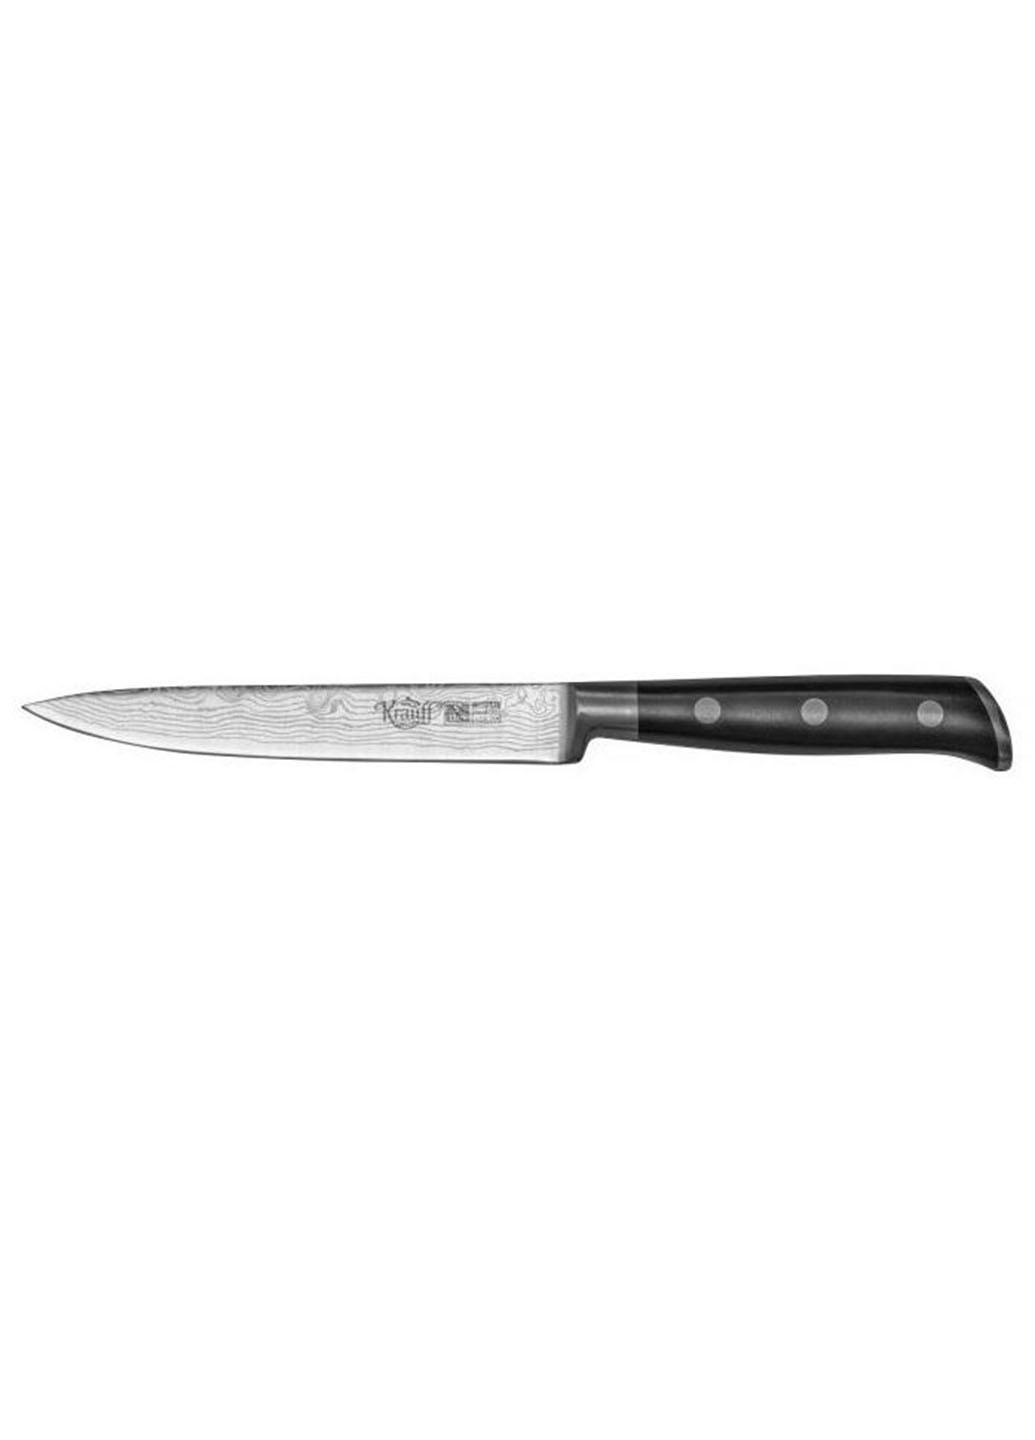 Нож универсальный Damask Stern 13 см нержавеющая сталь арт. KRF29-250-017 Krauff (266345233)